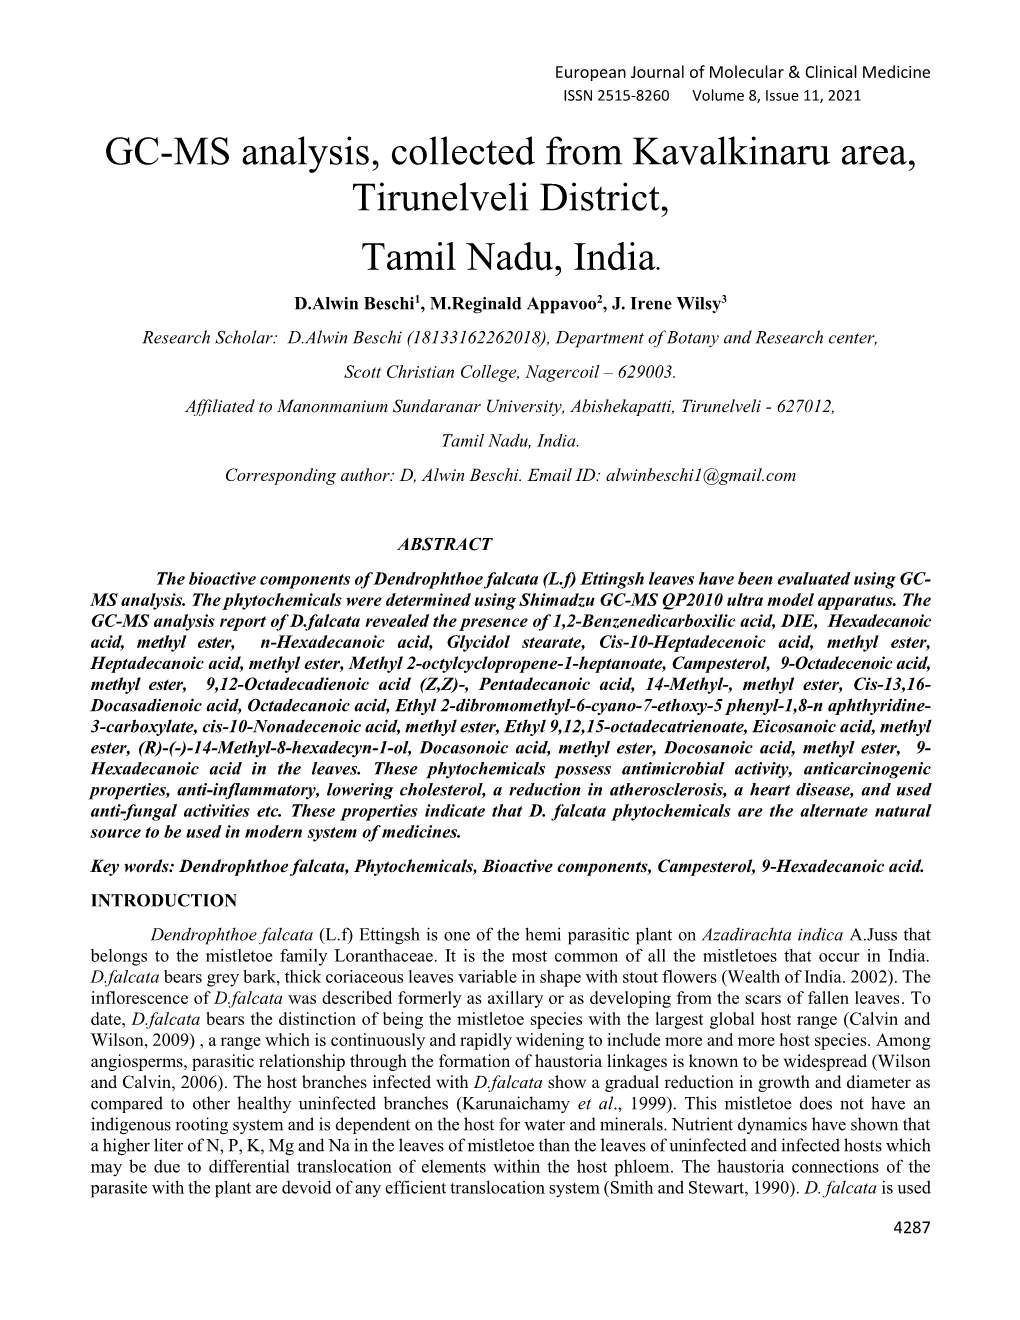 GC-MS Analysis, Collected from Kavalkinaru Area, Tirunelveli District